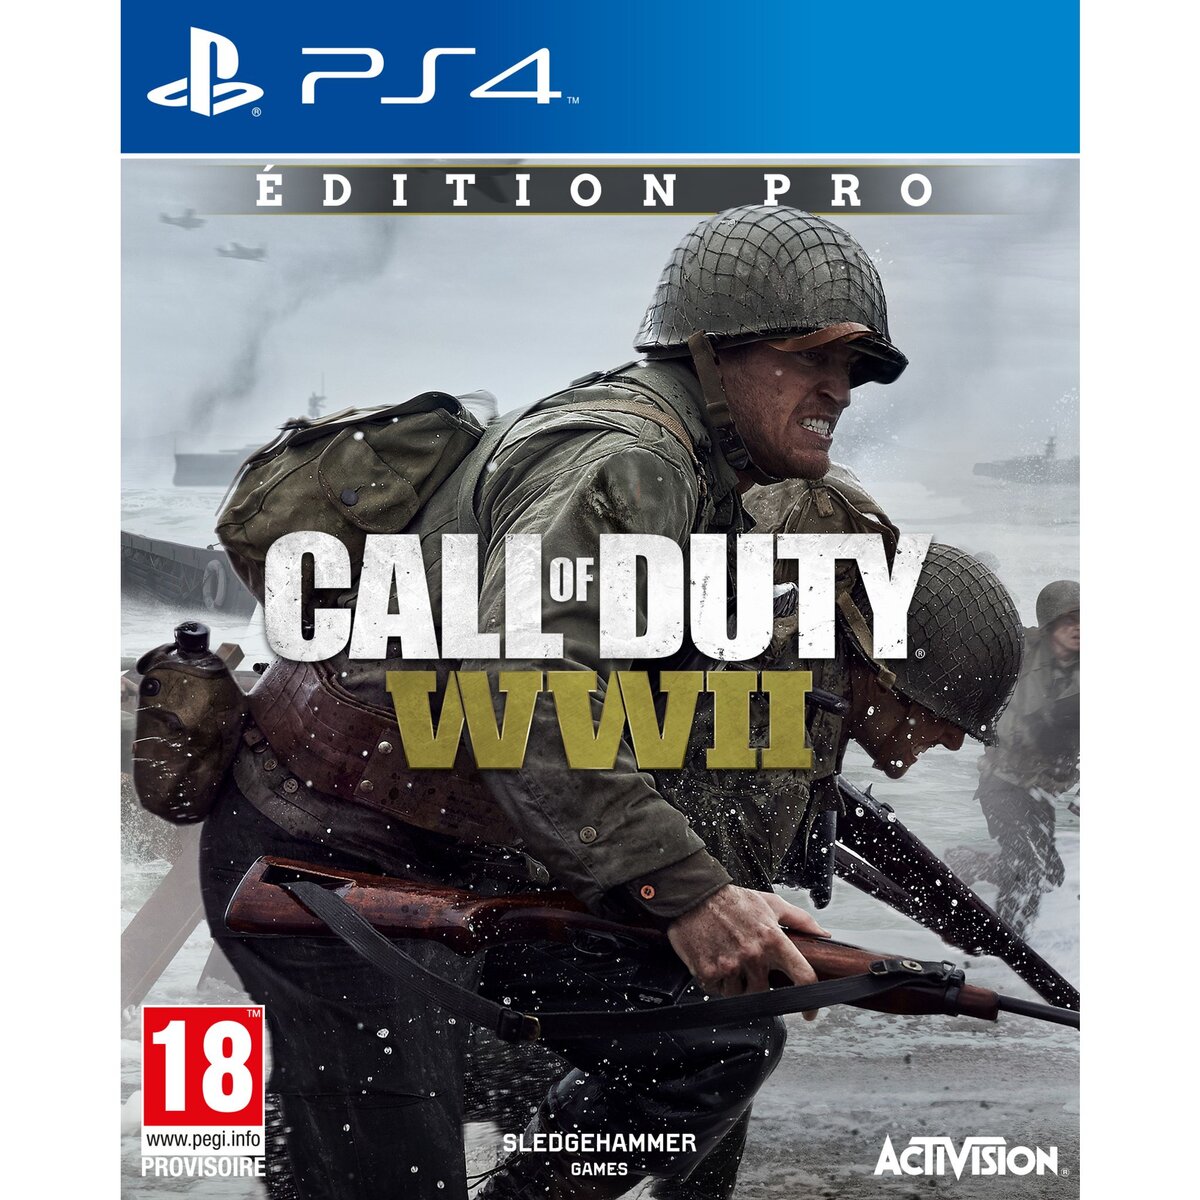 CALL OF DUTY WORLD WAR II - EDITION PRO PS4